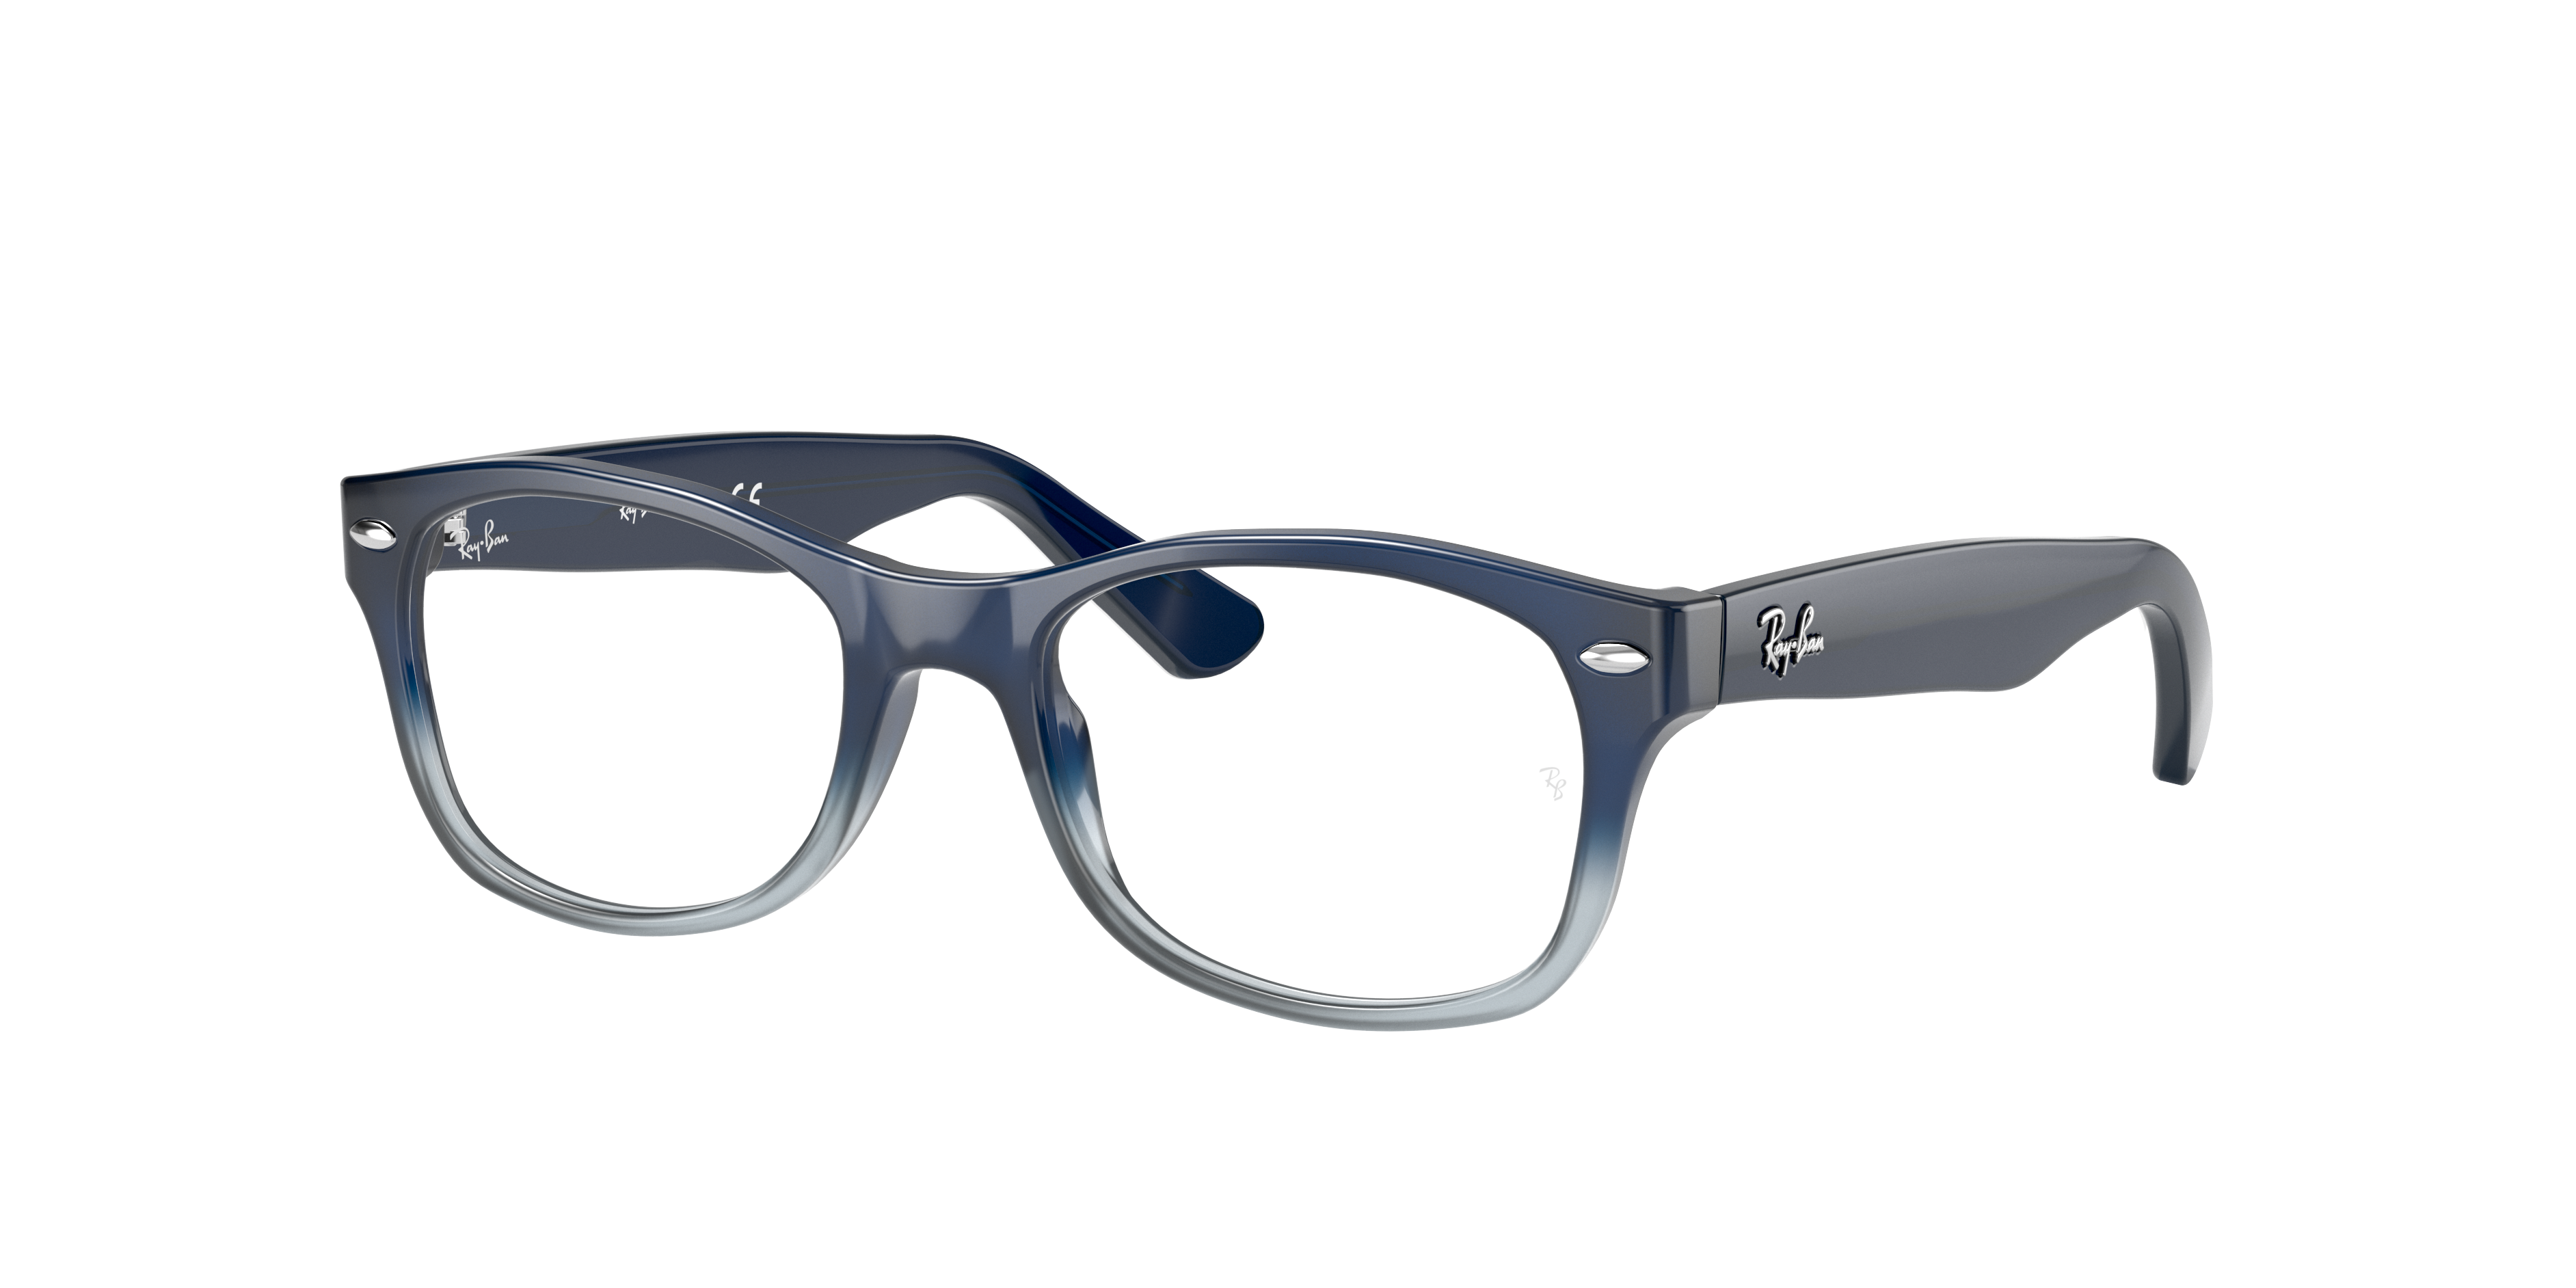 Rb1528 Optics Kids Eyeglasses with Blue Frame | Ray-Ban®